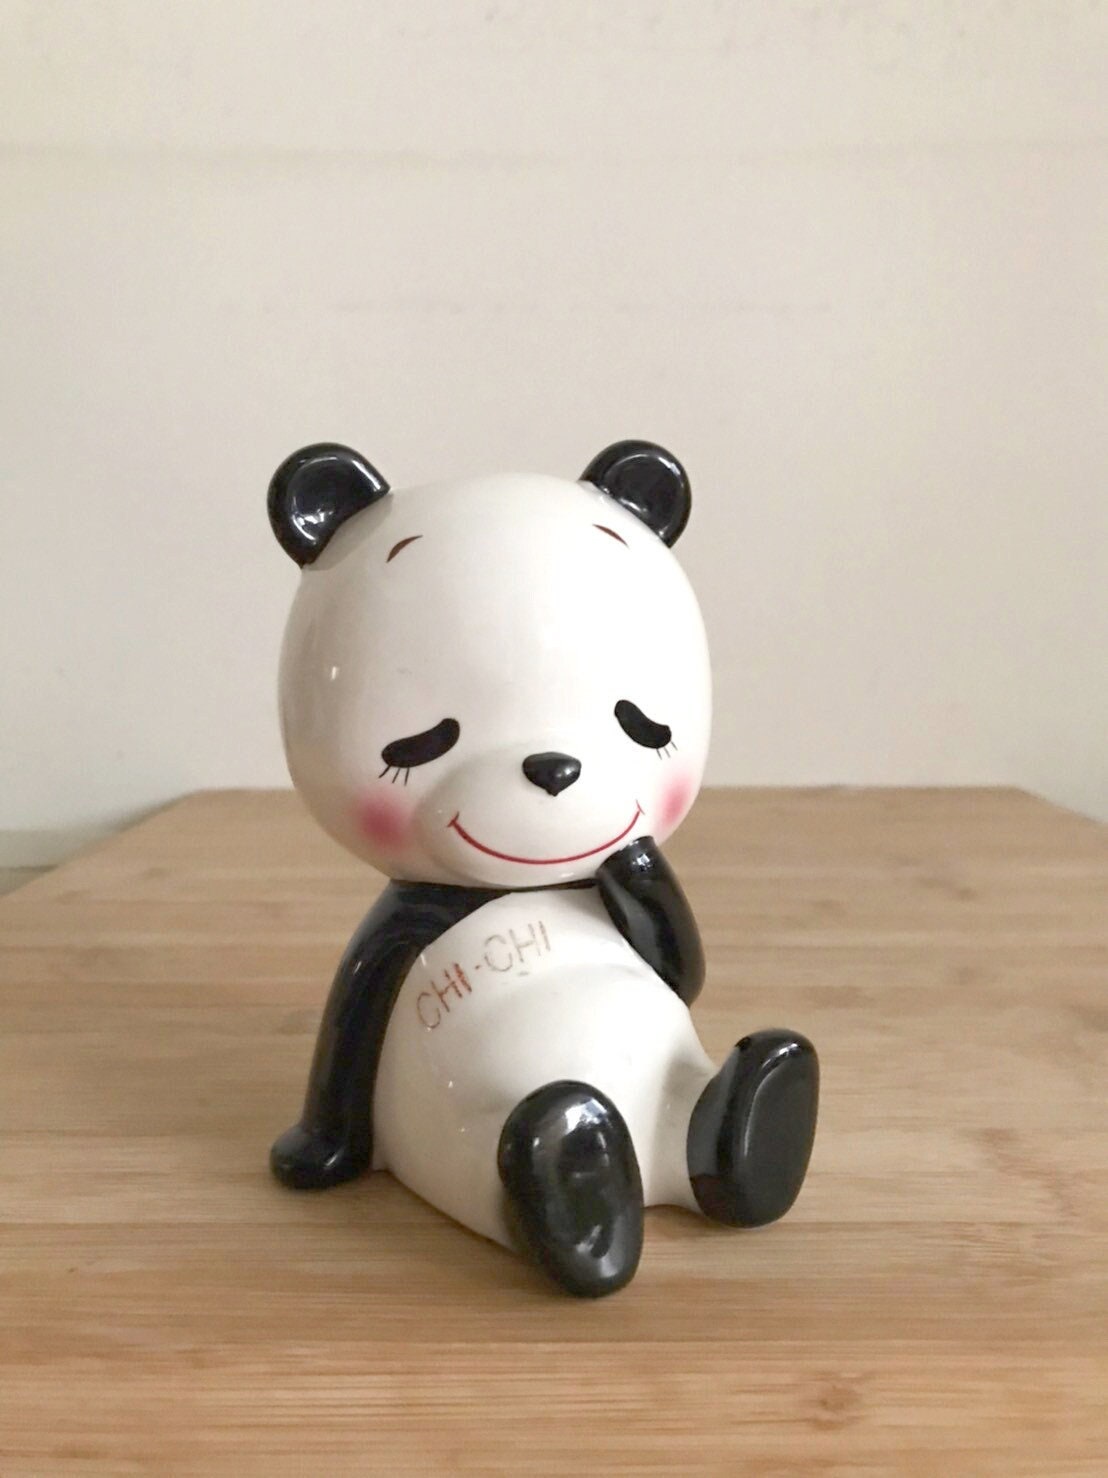 Handmade Ready to Paint Panda Figurines, Ceramics to Paint